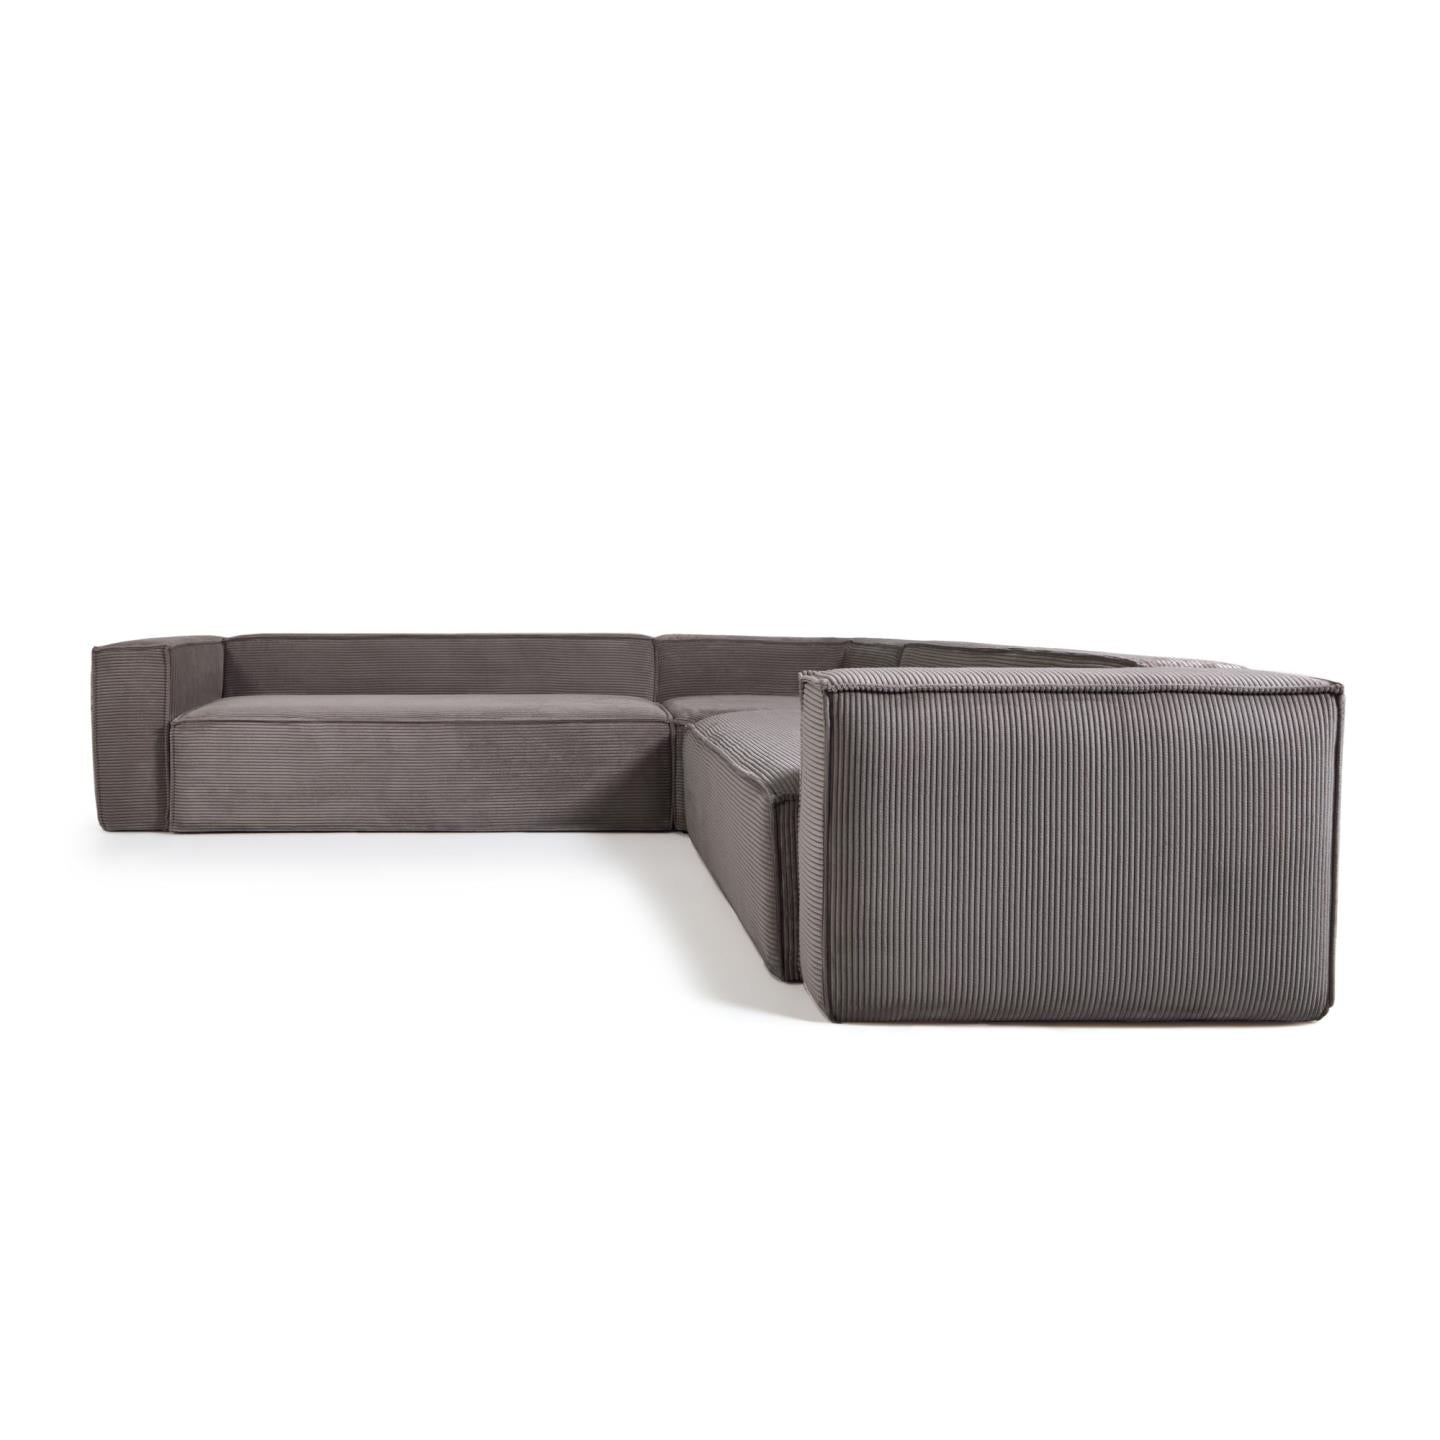 Blok 6 seater corner sofa in grey wide seam corduroy, 320 x 320 cm